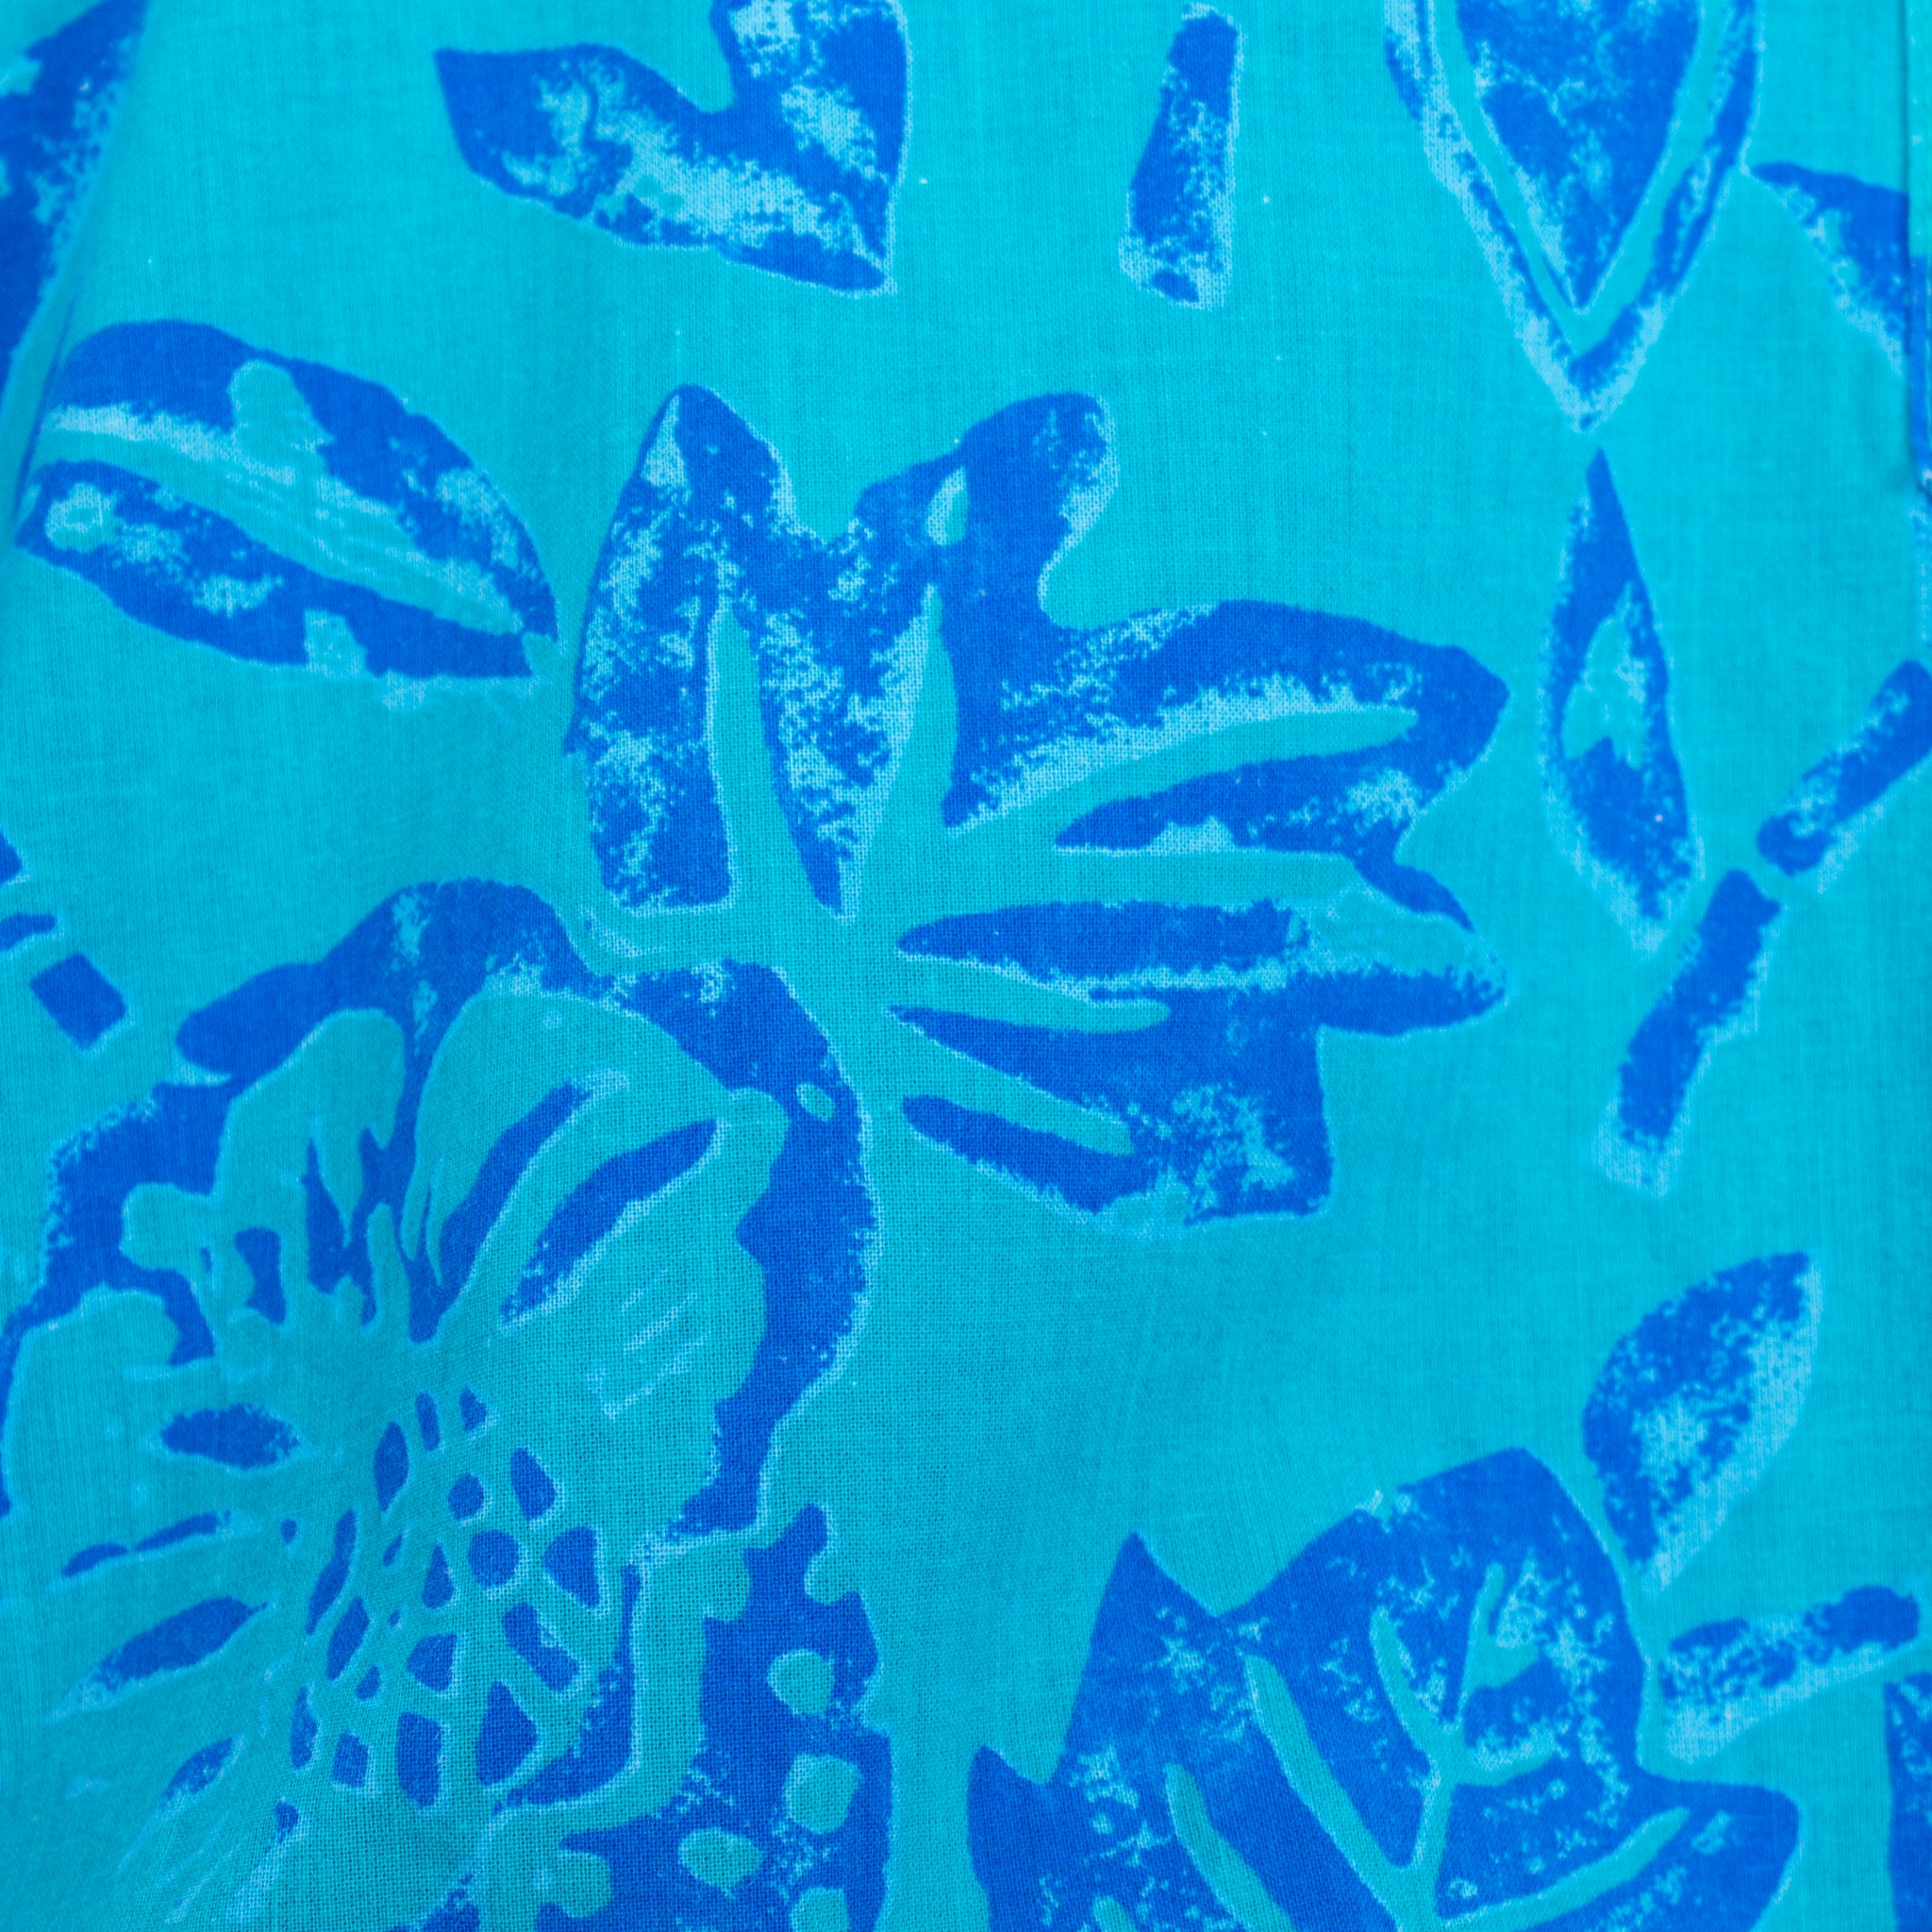 Jessica Howard Pineapple Print Midi Dress